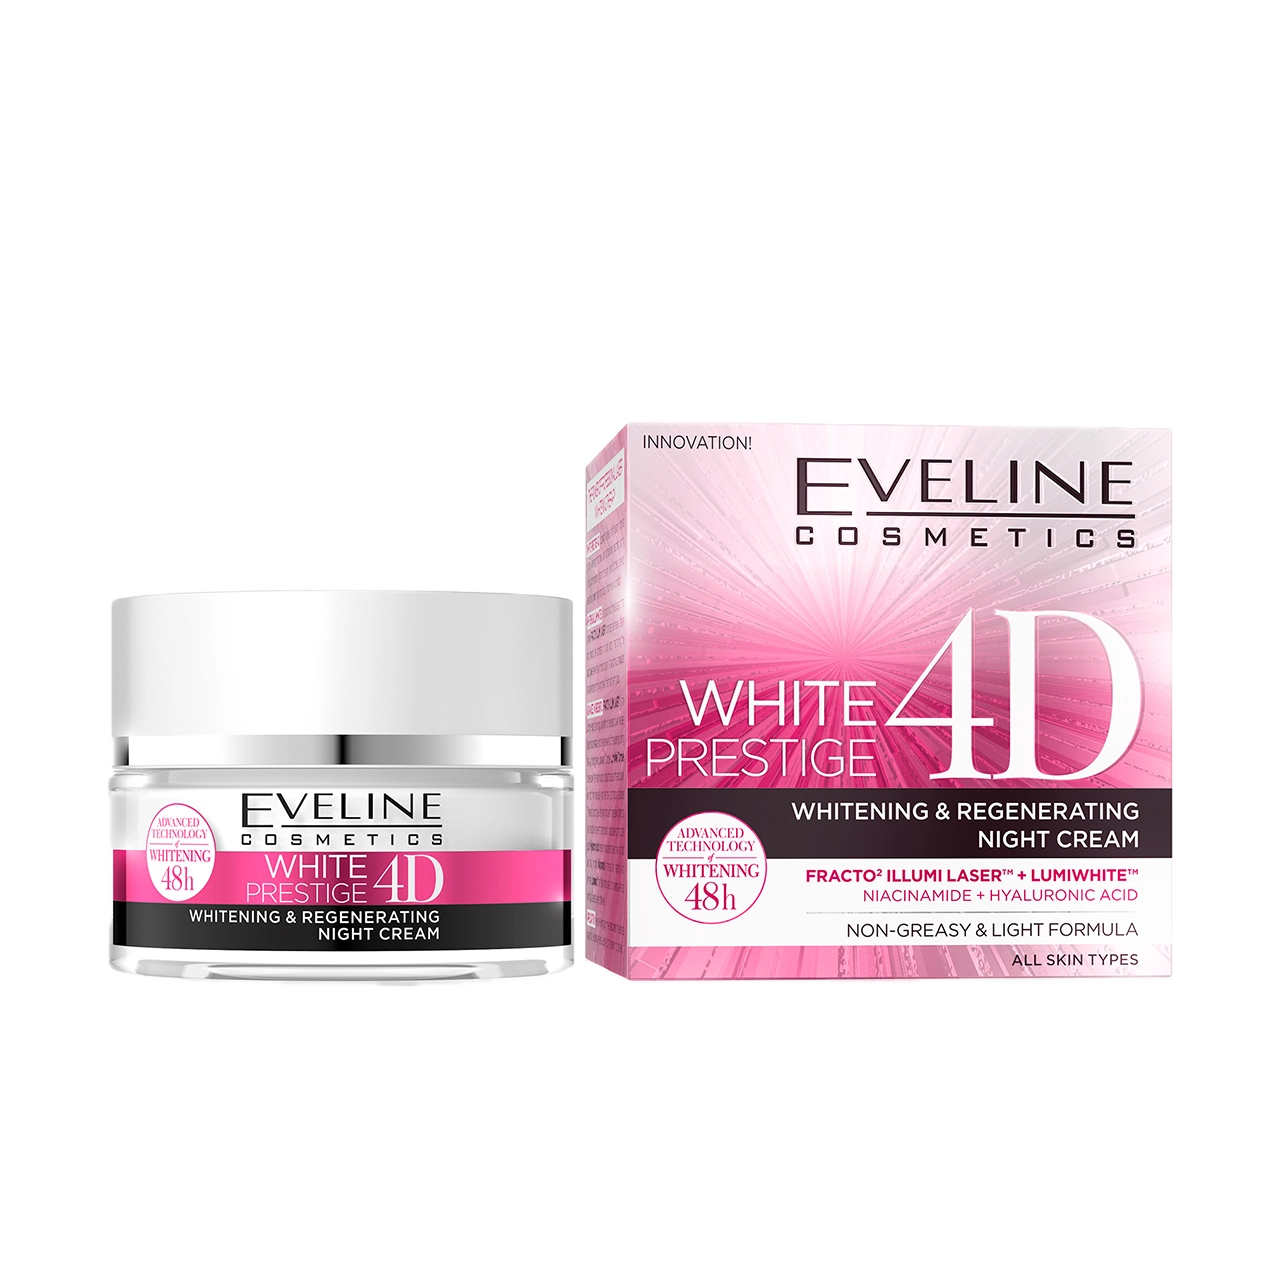 229-5907609345721-Eveline Cosmetics White Prestige 4D Whitening & Regenerating Night Cream 50ml